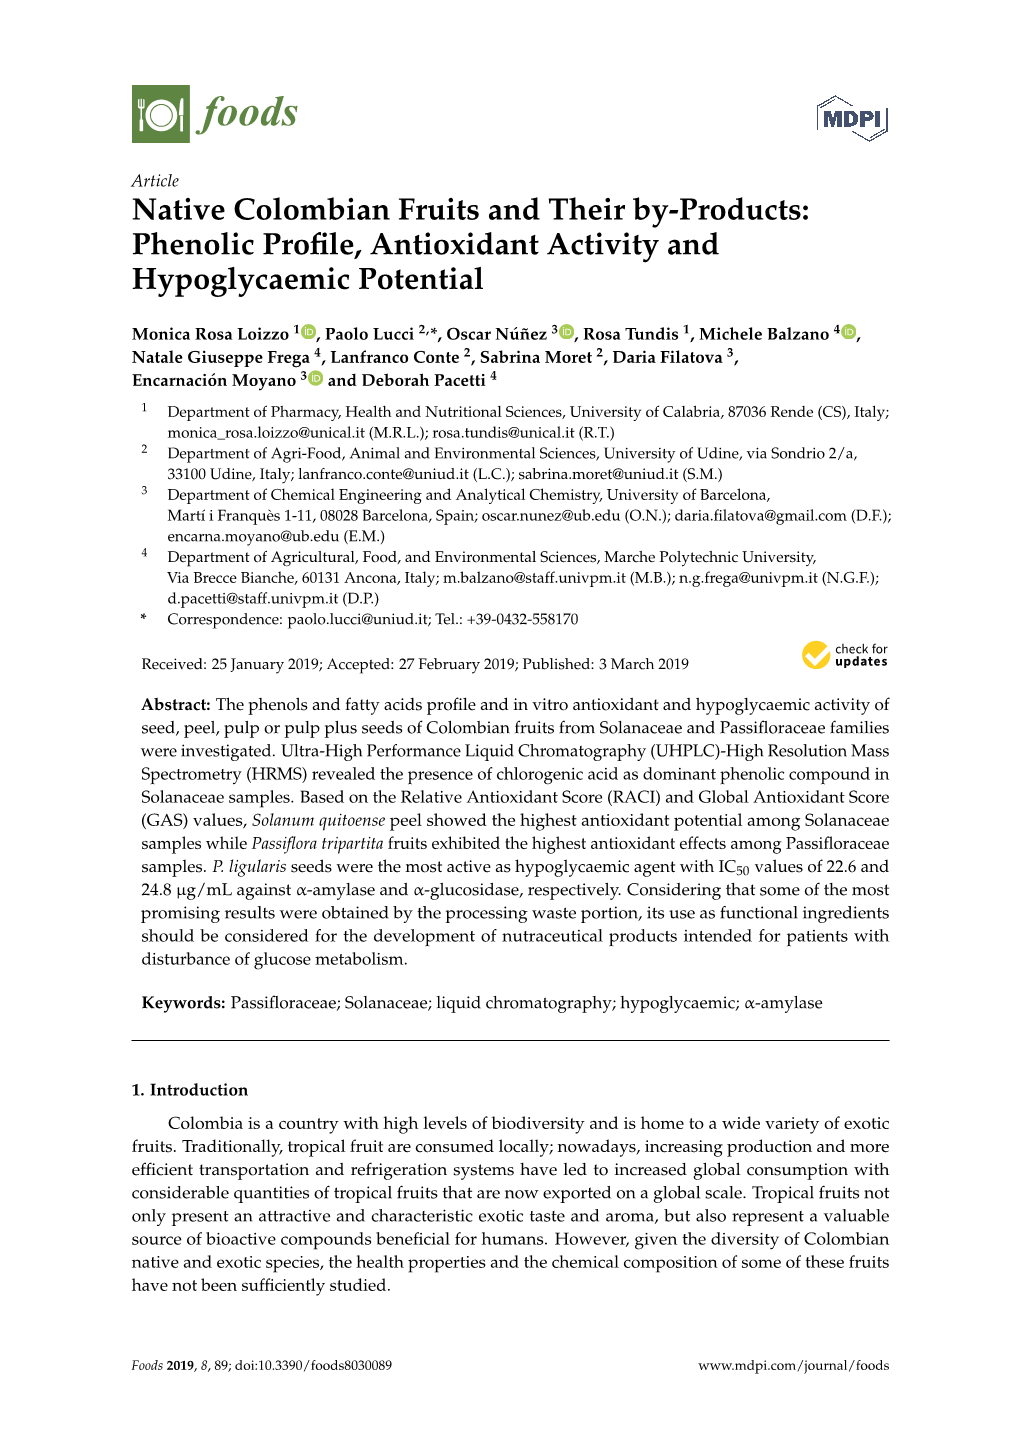 Phenolic Profile, Antioxidant Activity and Hypoglycaemic Potential